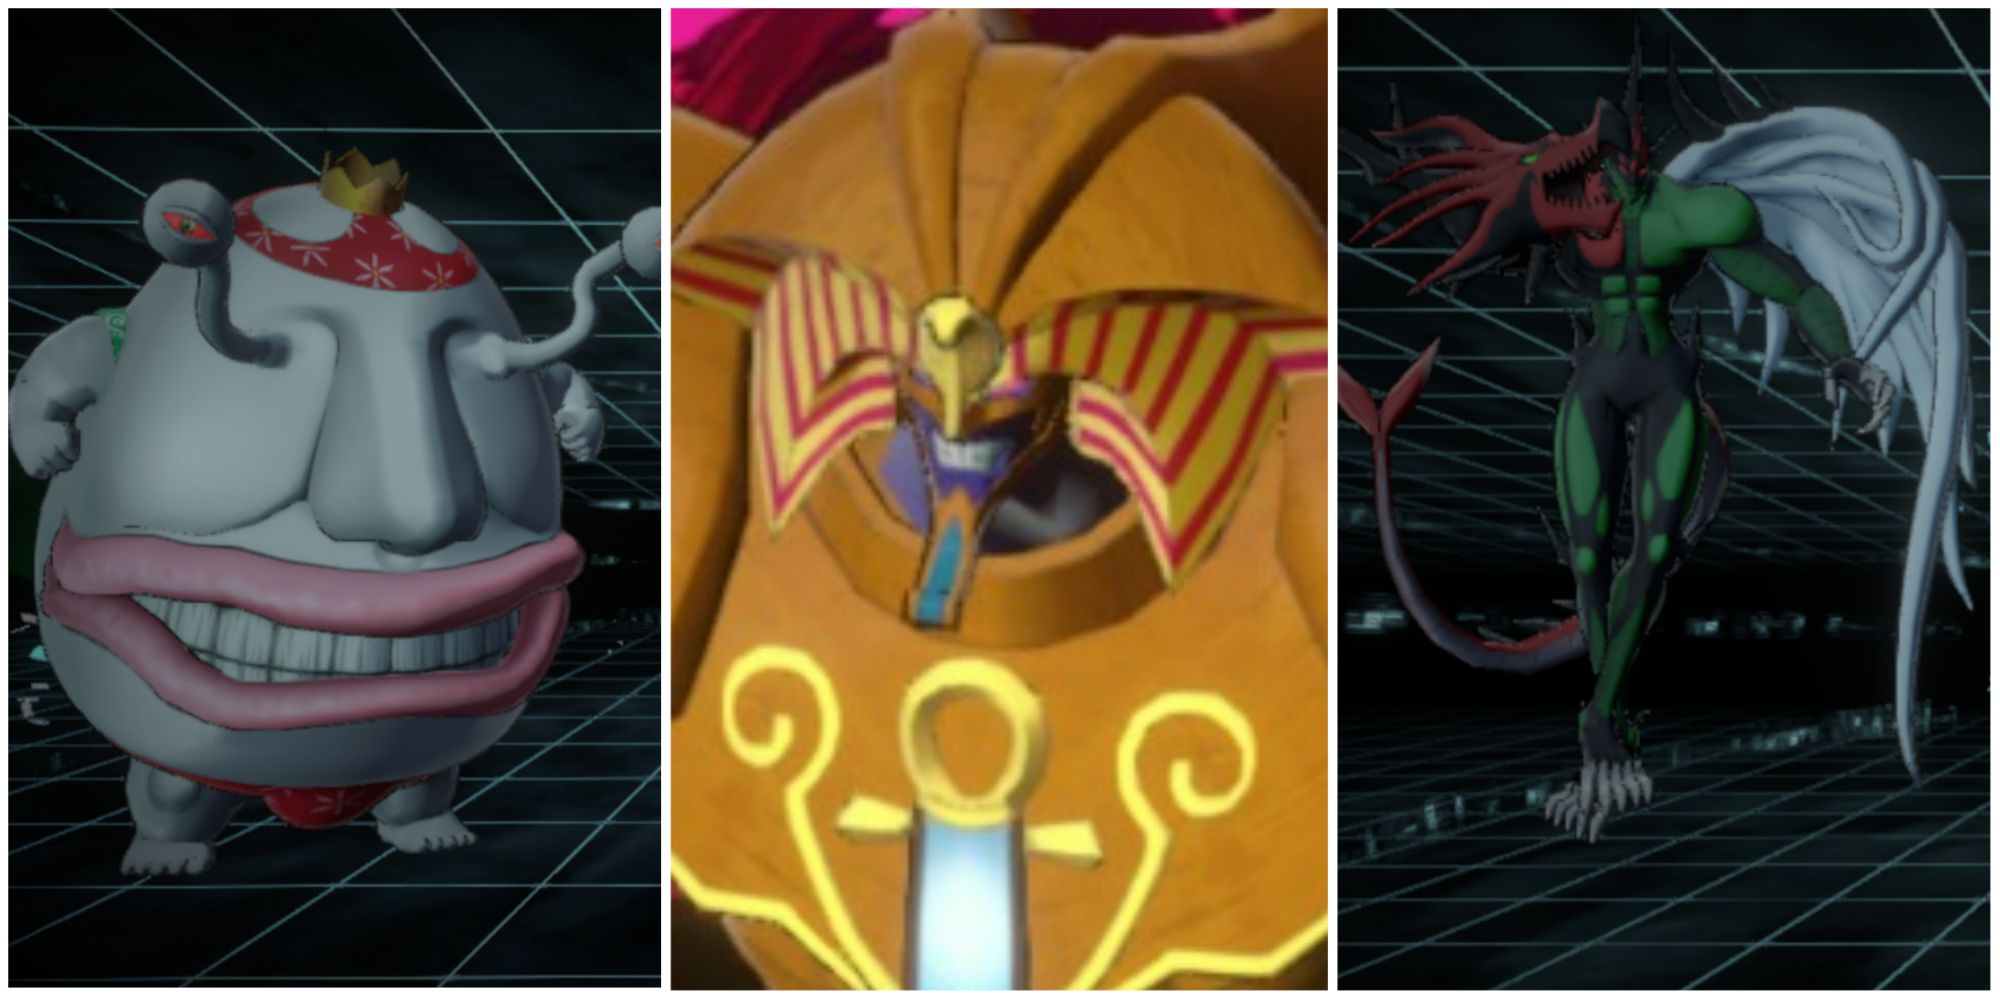 Yu-Gi-Oh! Cross Duel - split feature image featuring 3D models of Ojama King, Exodia, and Elemental HERO Flame Wingman